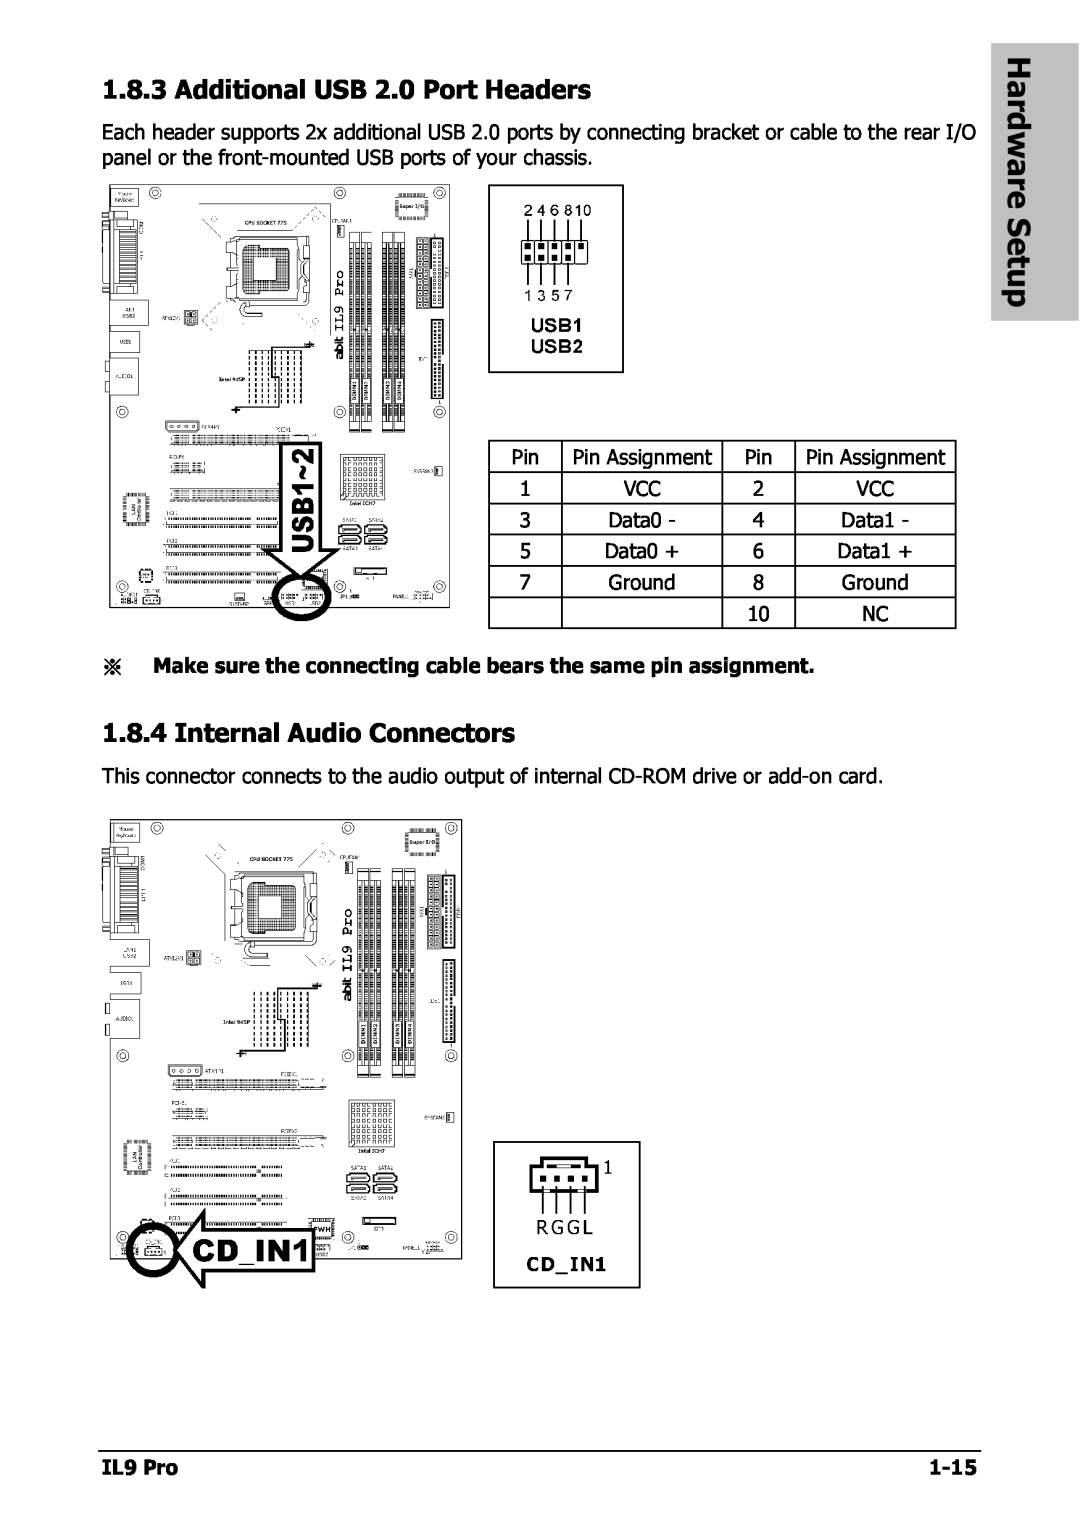 Nextar IL9 PRO appendix Hardware Setup, Additional USB 2.0 Port Headers, Internal Audio Connectors 